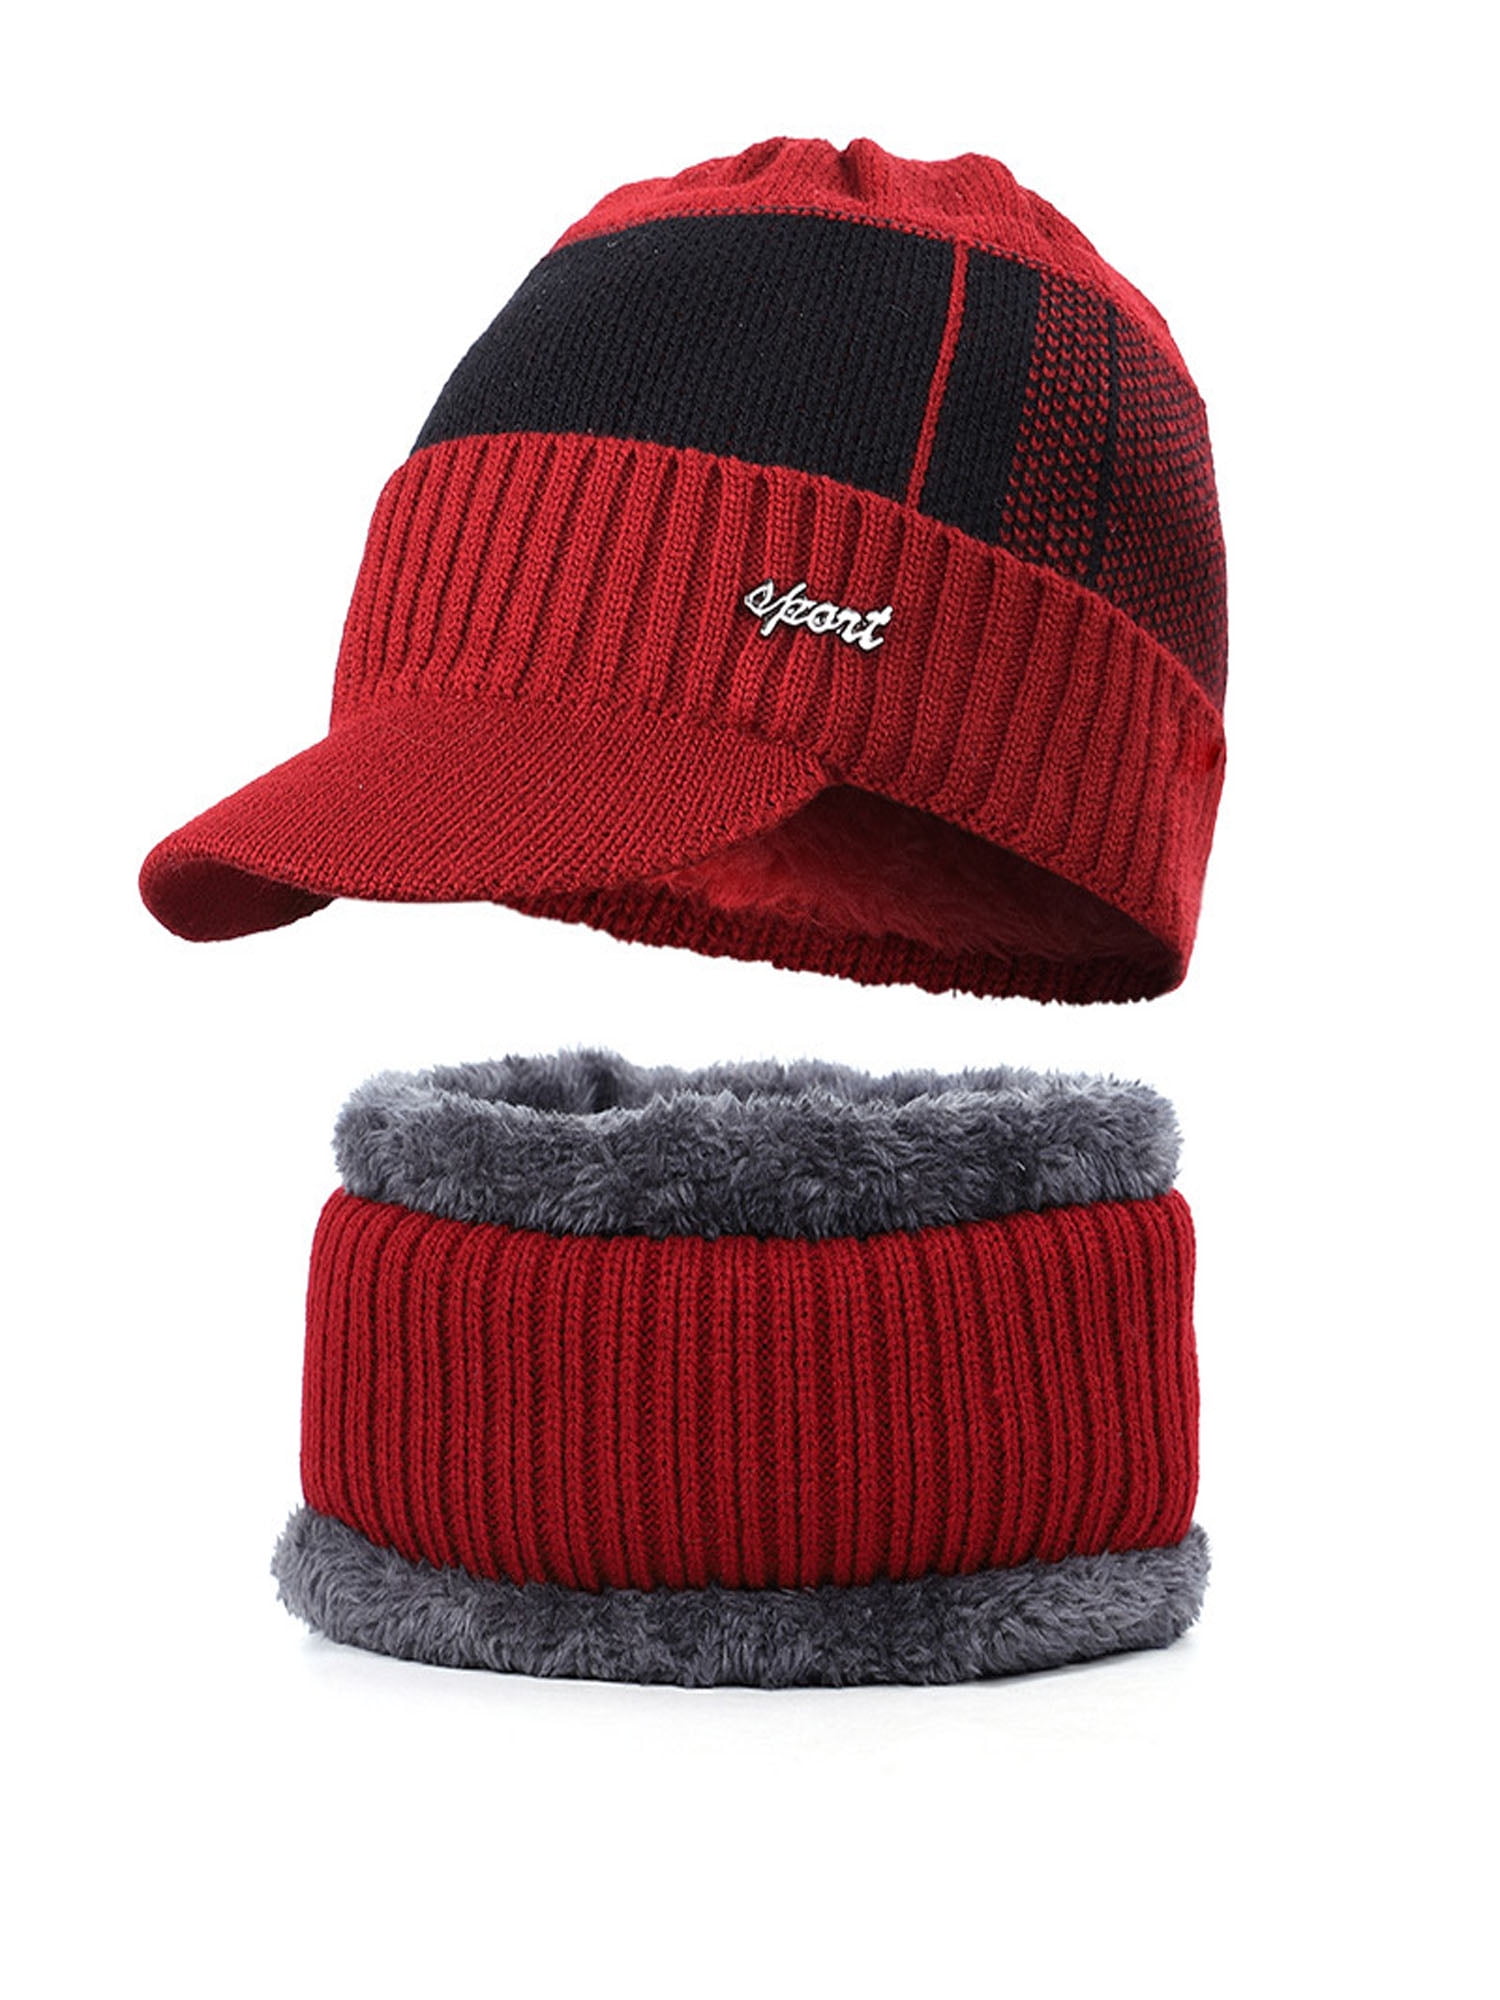 Unisex Chunky Cable Knit Visor Brim Winter Hat Beanie Thick Warm Men Women hat 